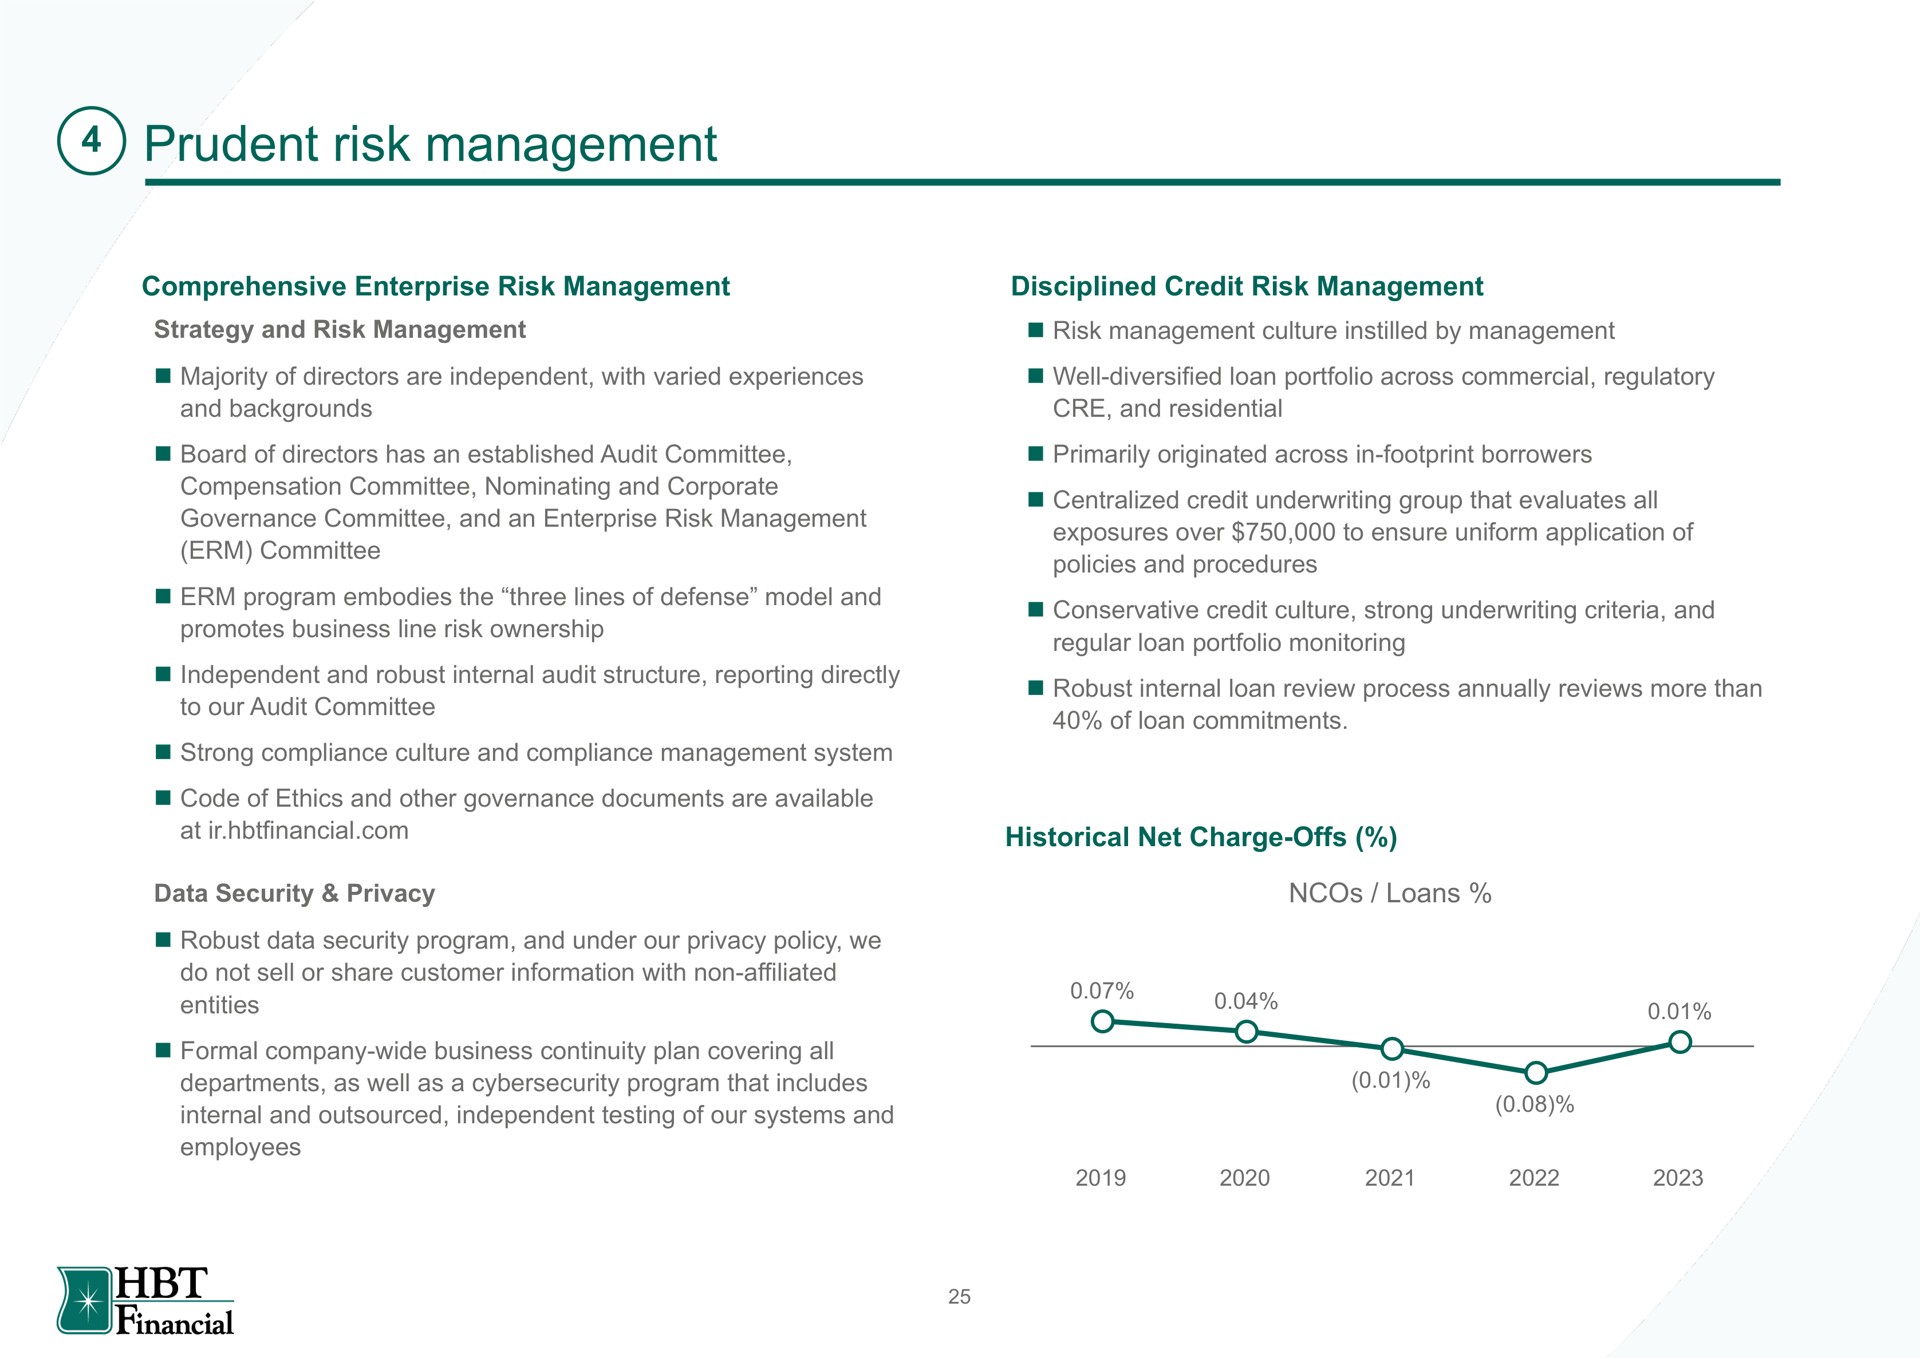 prudent risk management | HBT Financial